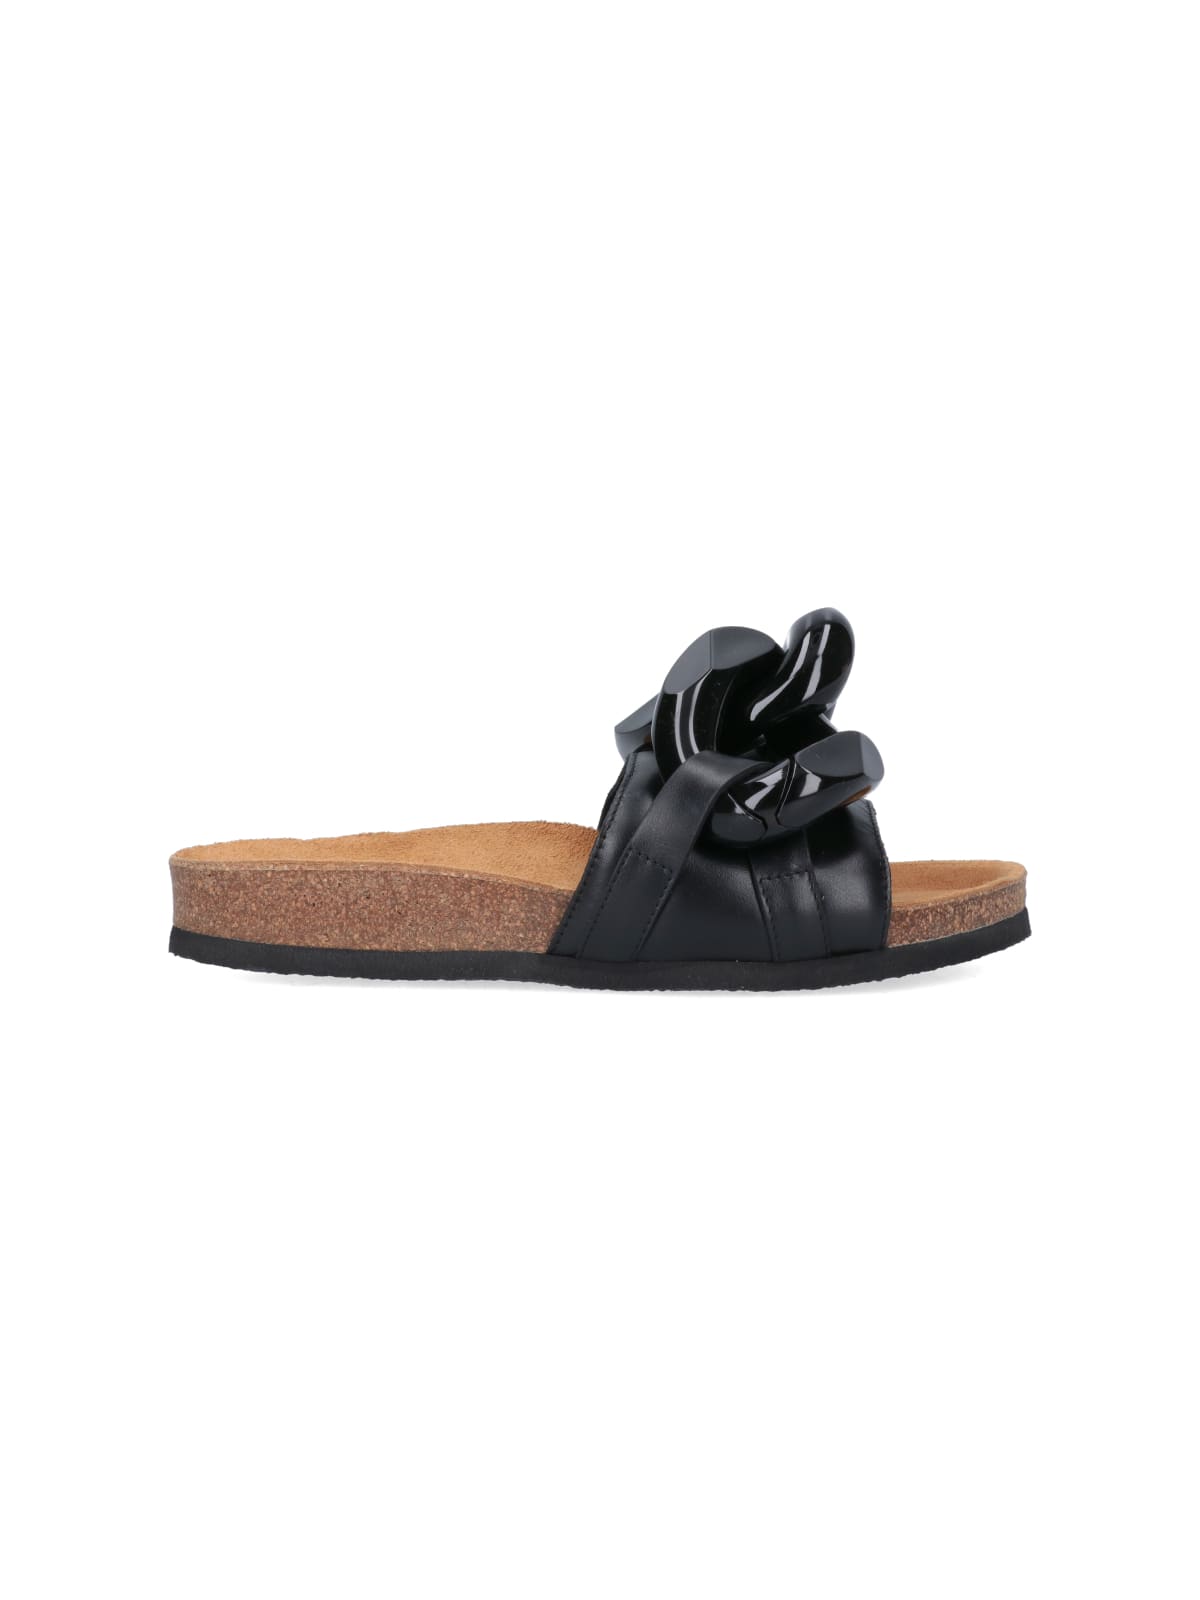 J.W. Anderson chain Slide Sandals